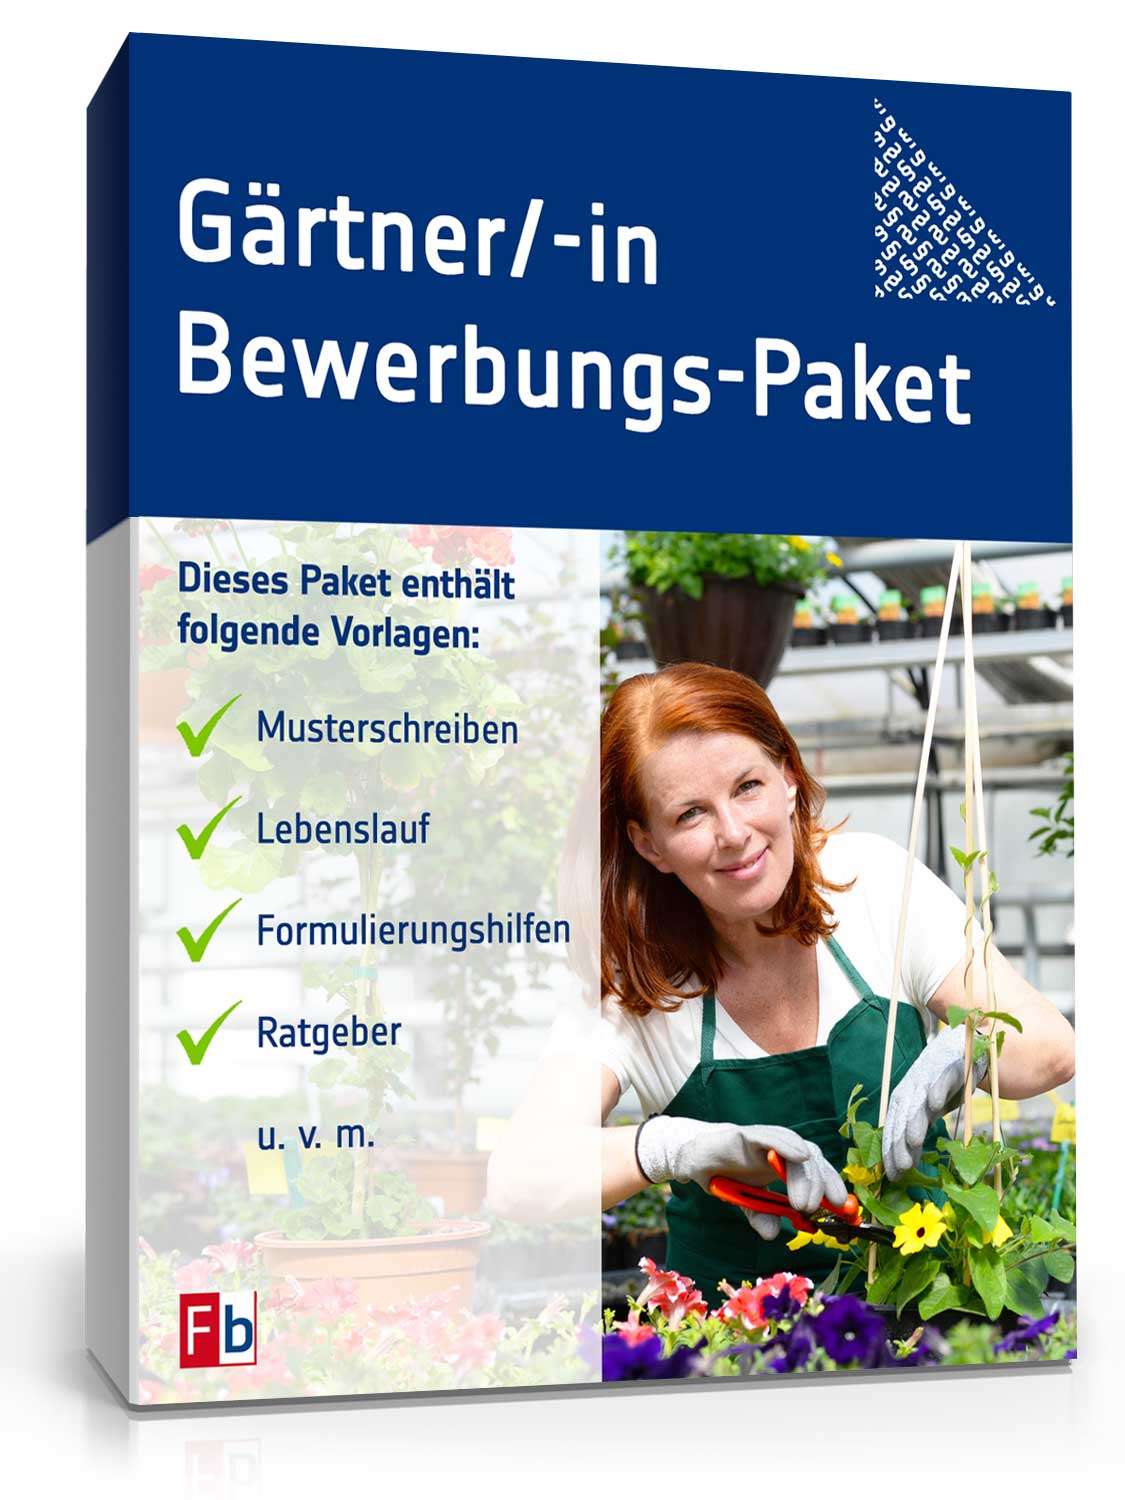 Hauptbild des Produkts: Bewerbungs-Paket Gärtner